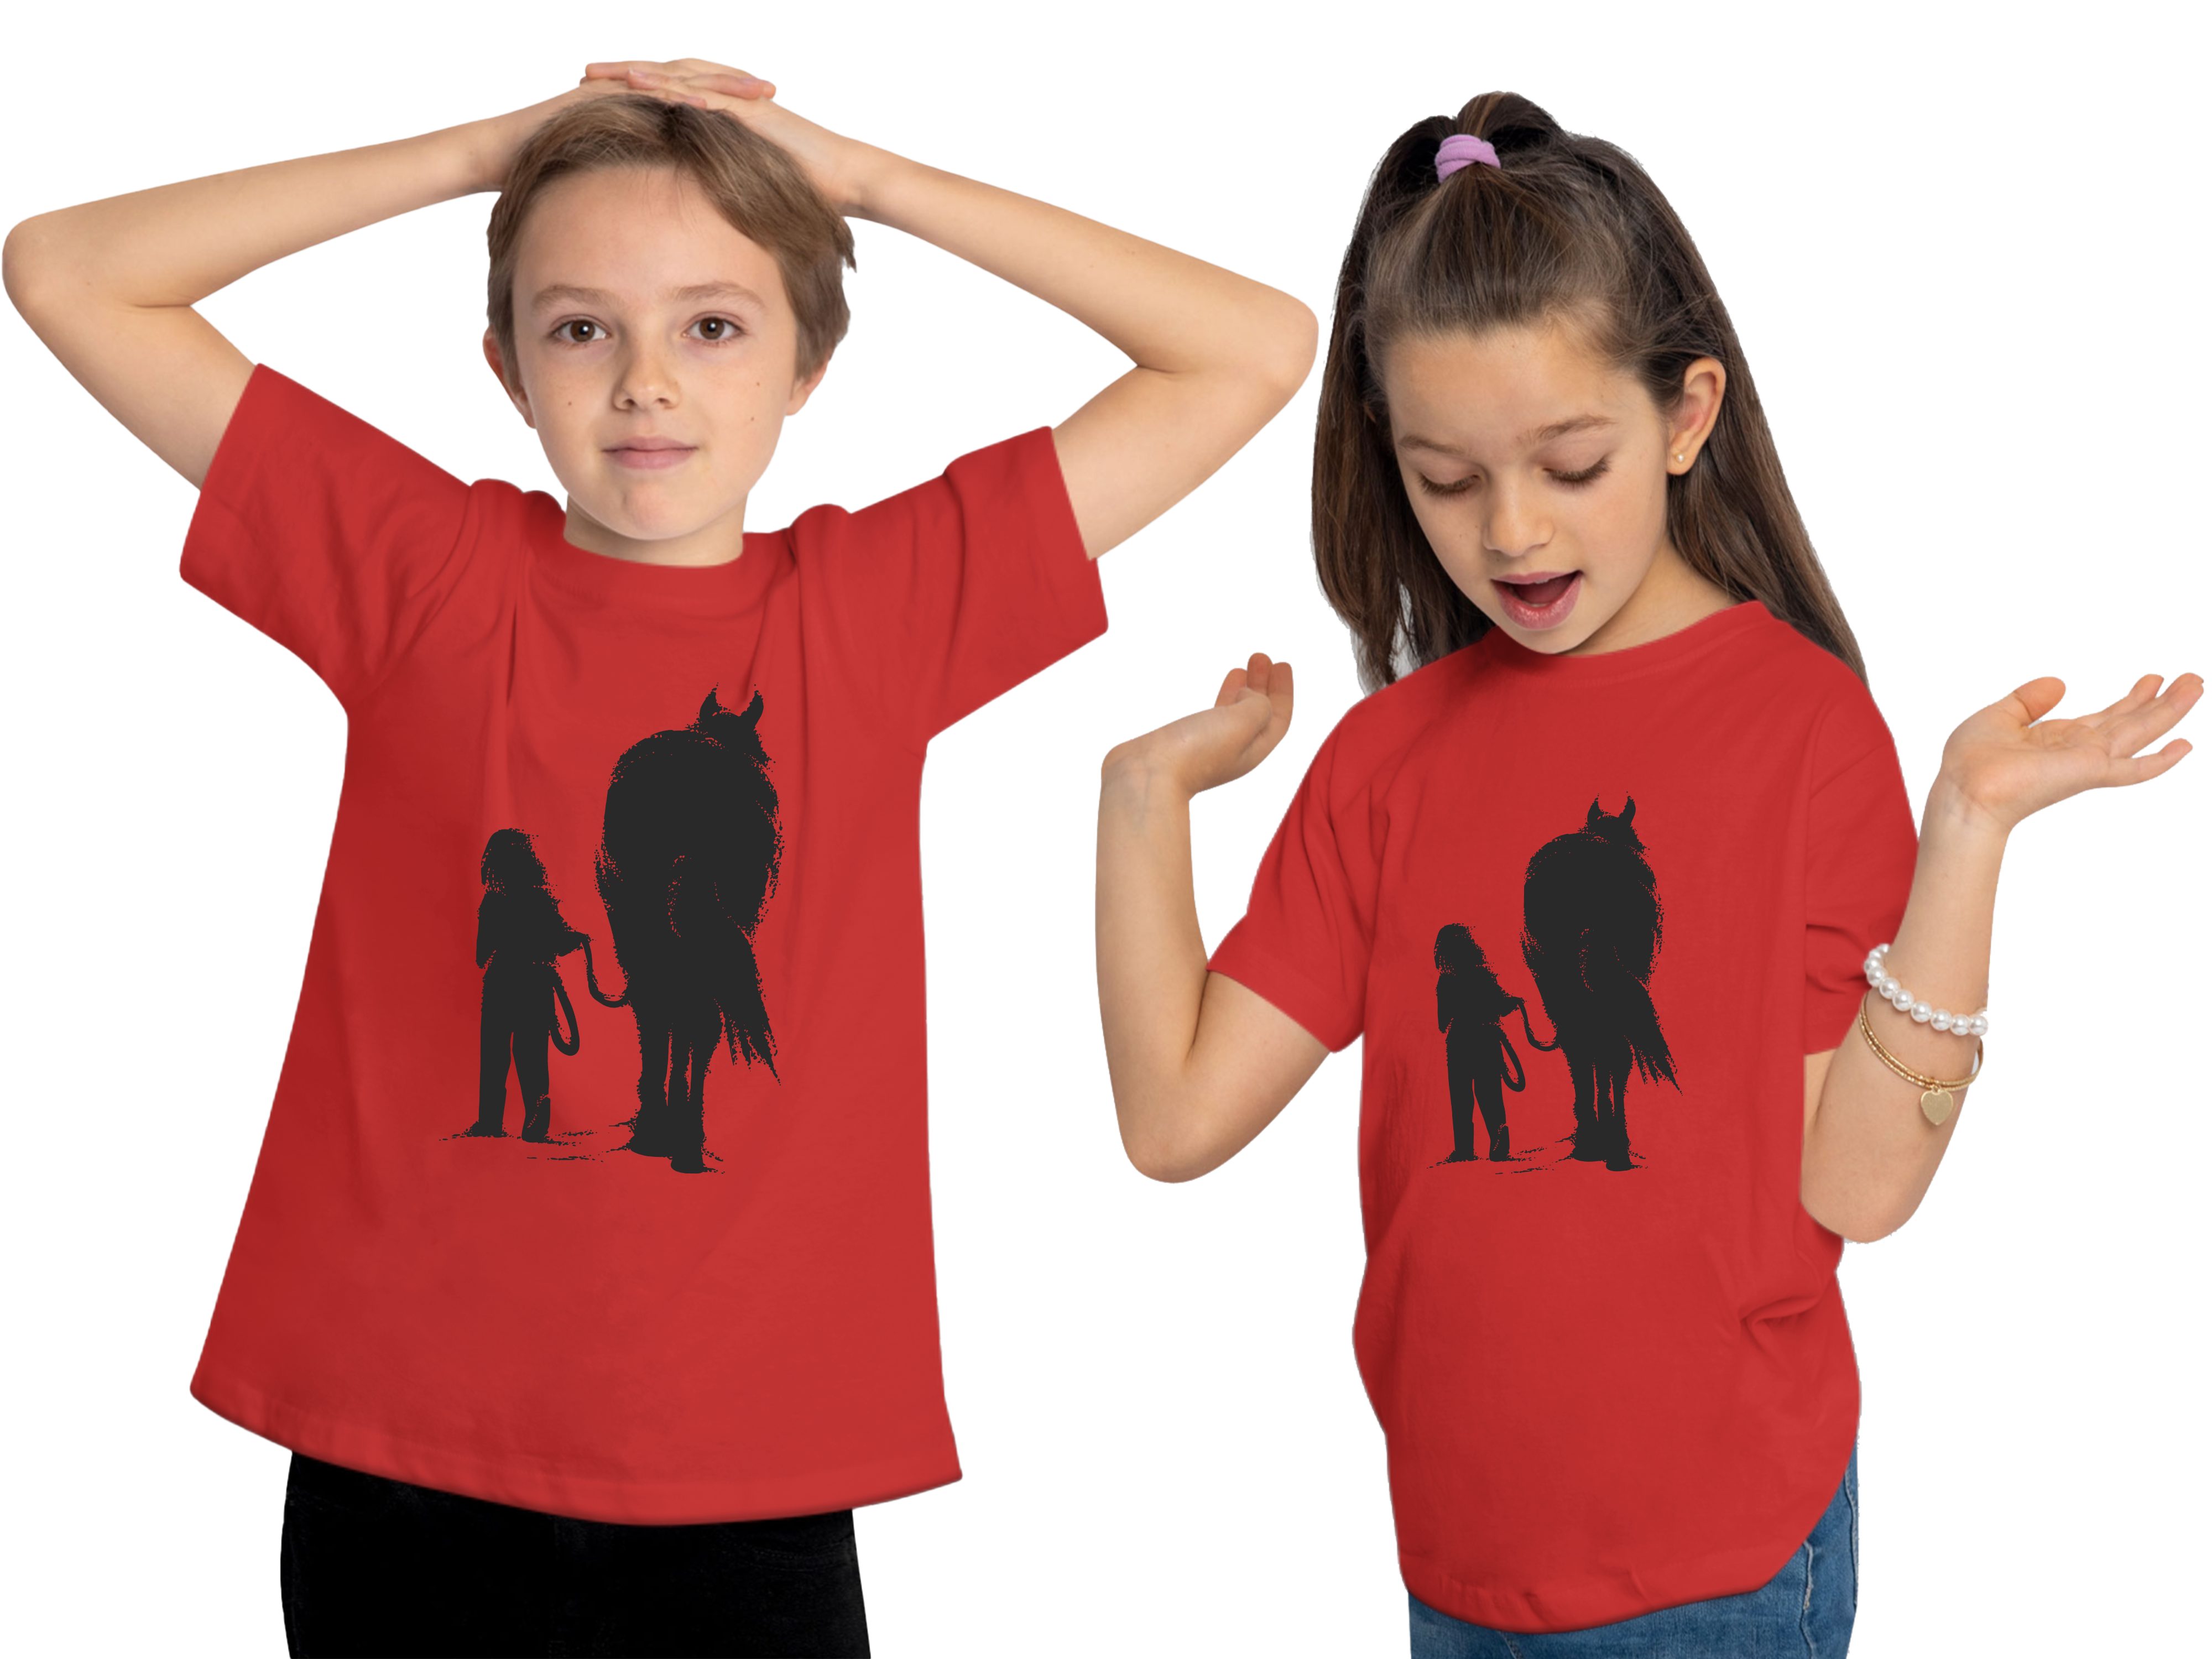 & mit Spaziergang Shirt Kinder MyDesign24 beim Pferd Print Baumwollshirt i250 rot T-Shirt bedruckt - Mädchen Aufdruck,